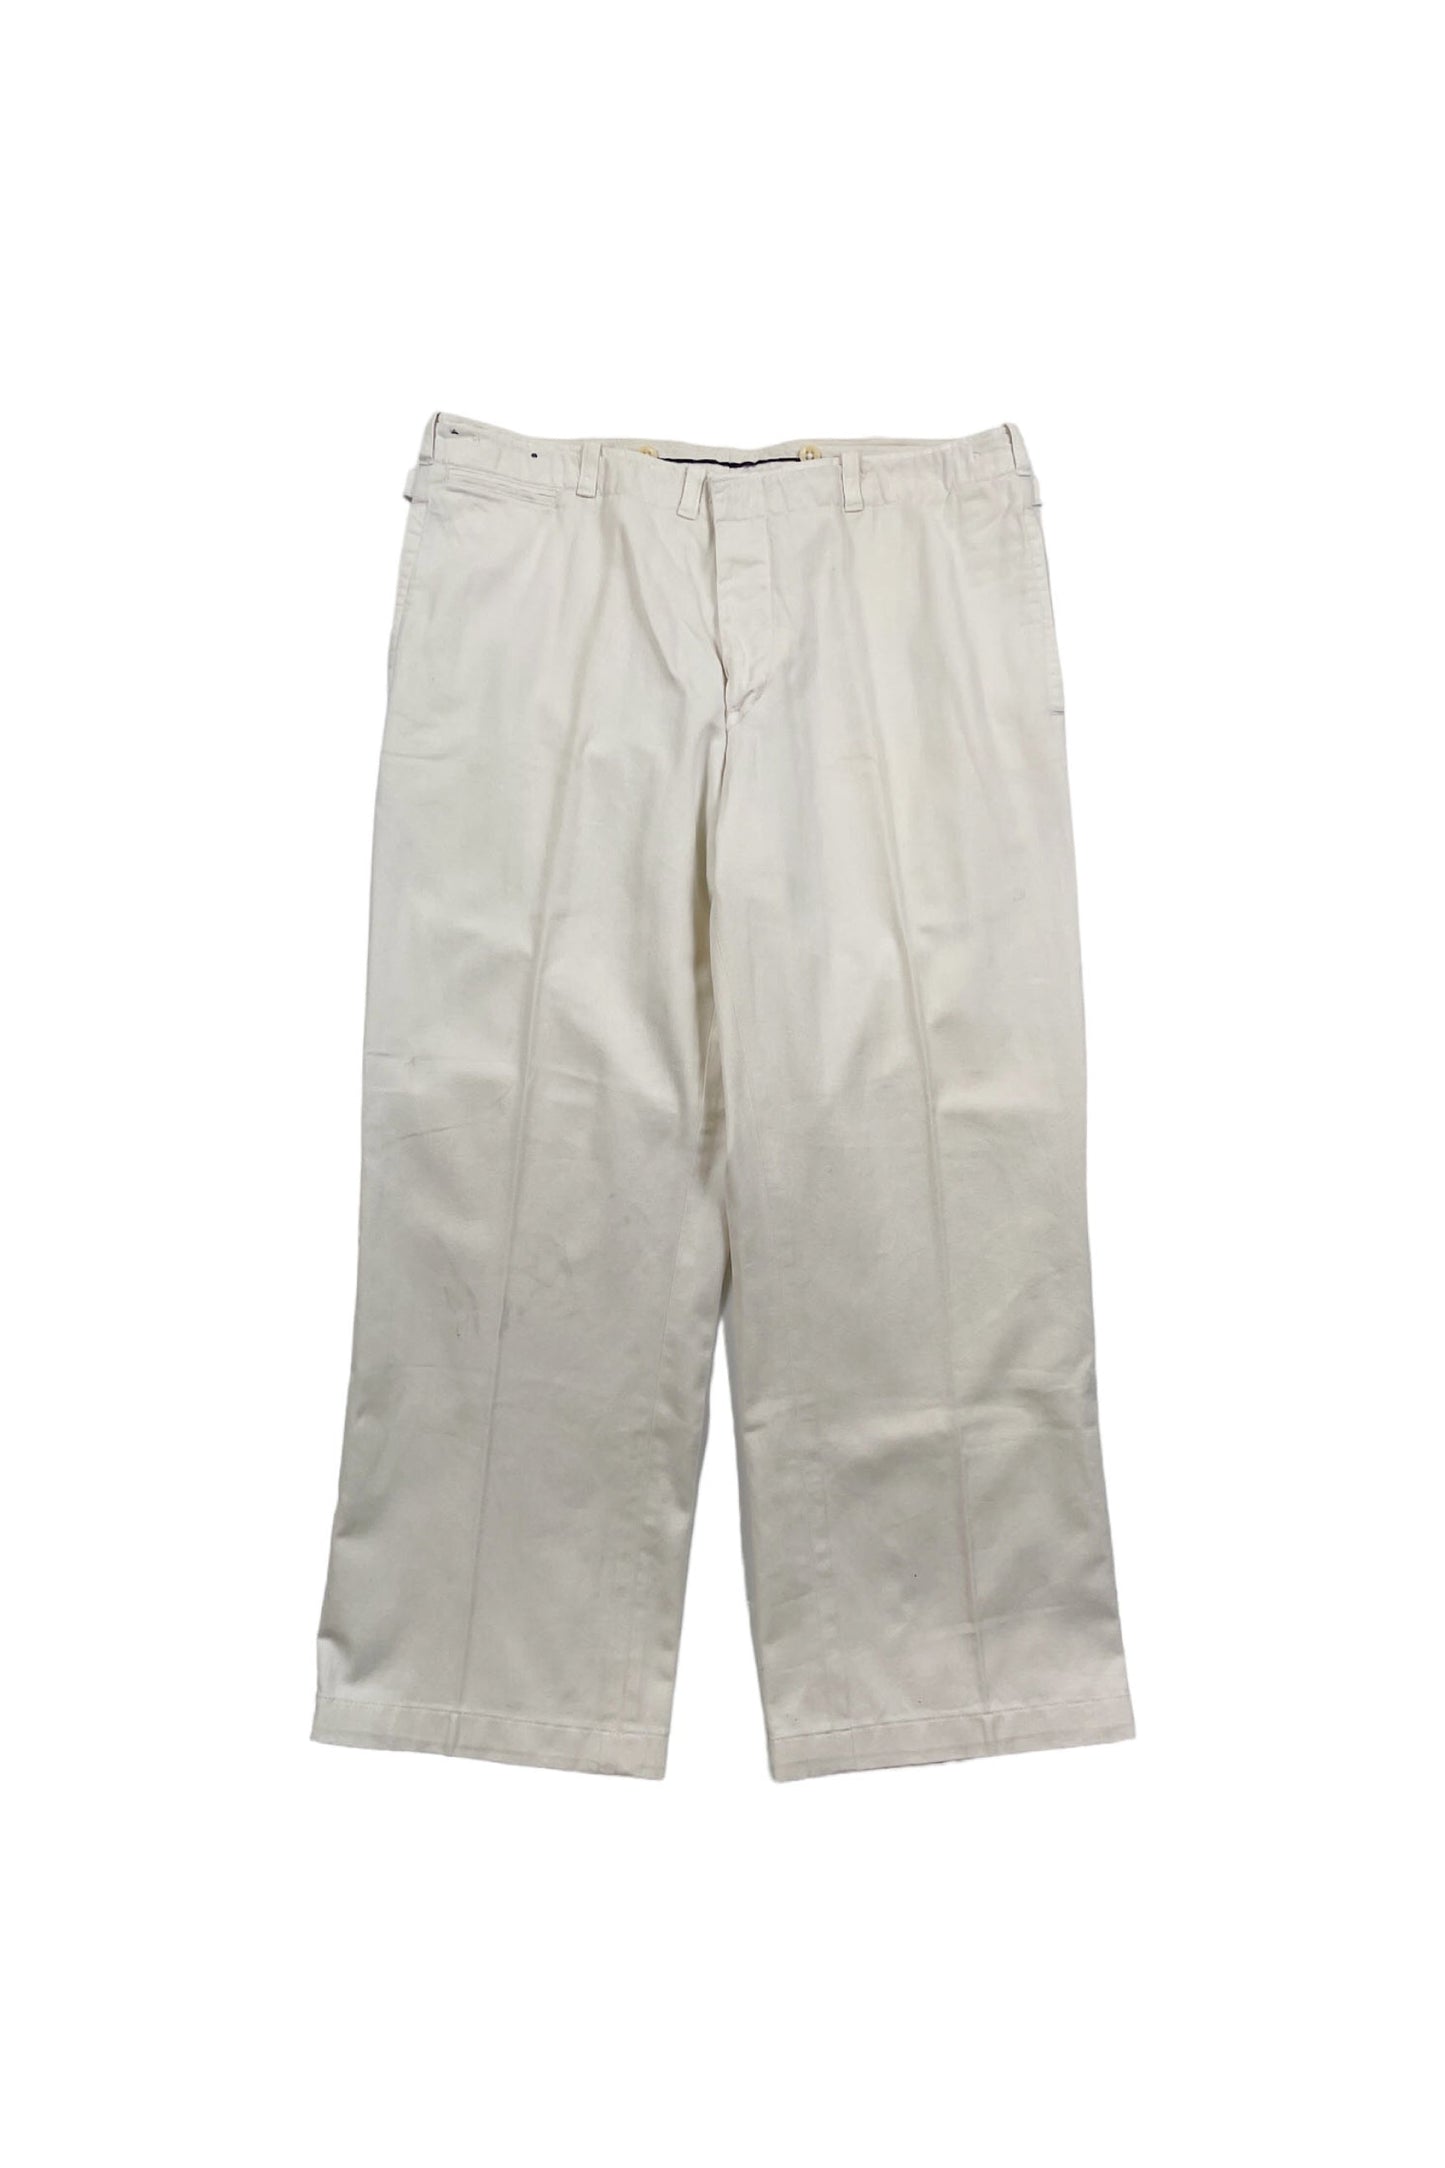 90's Polo by Ralph Lauren white cotton pants